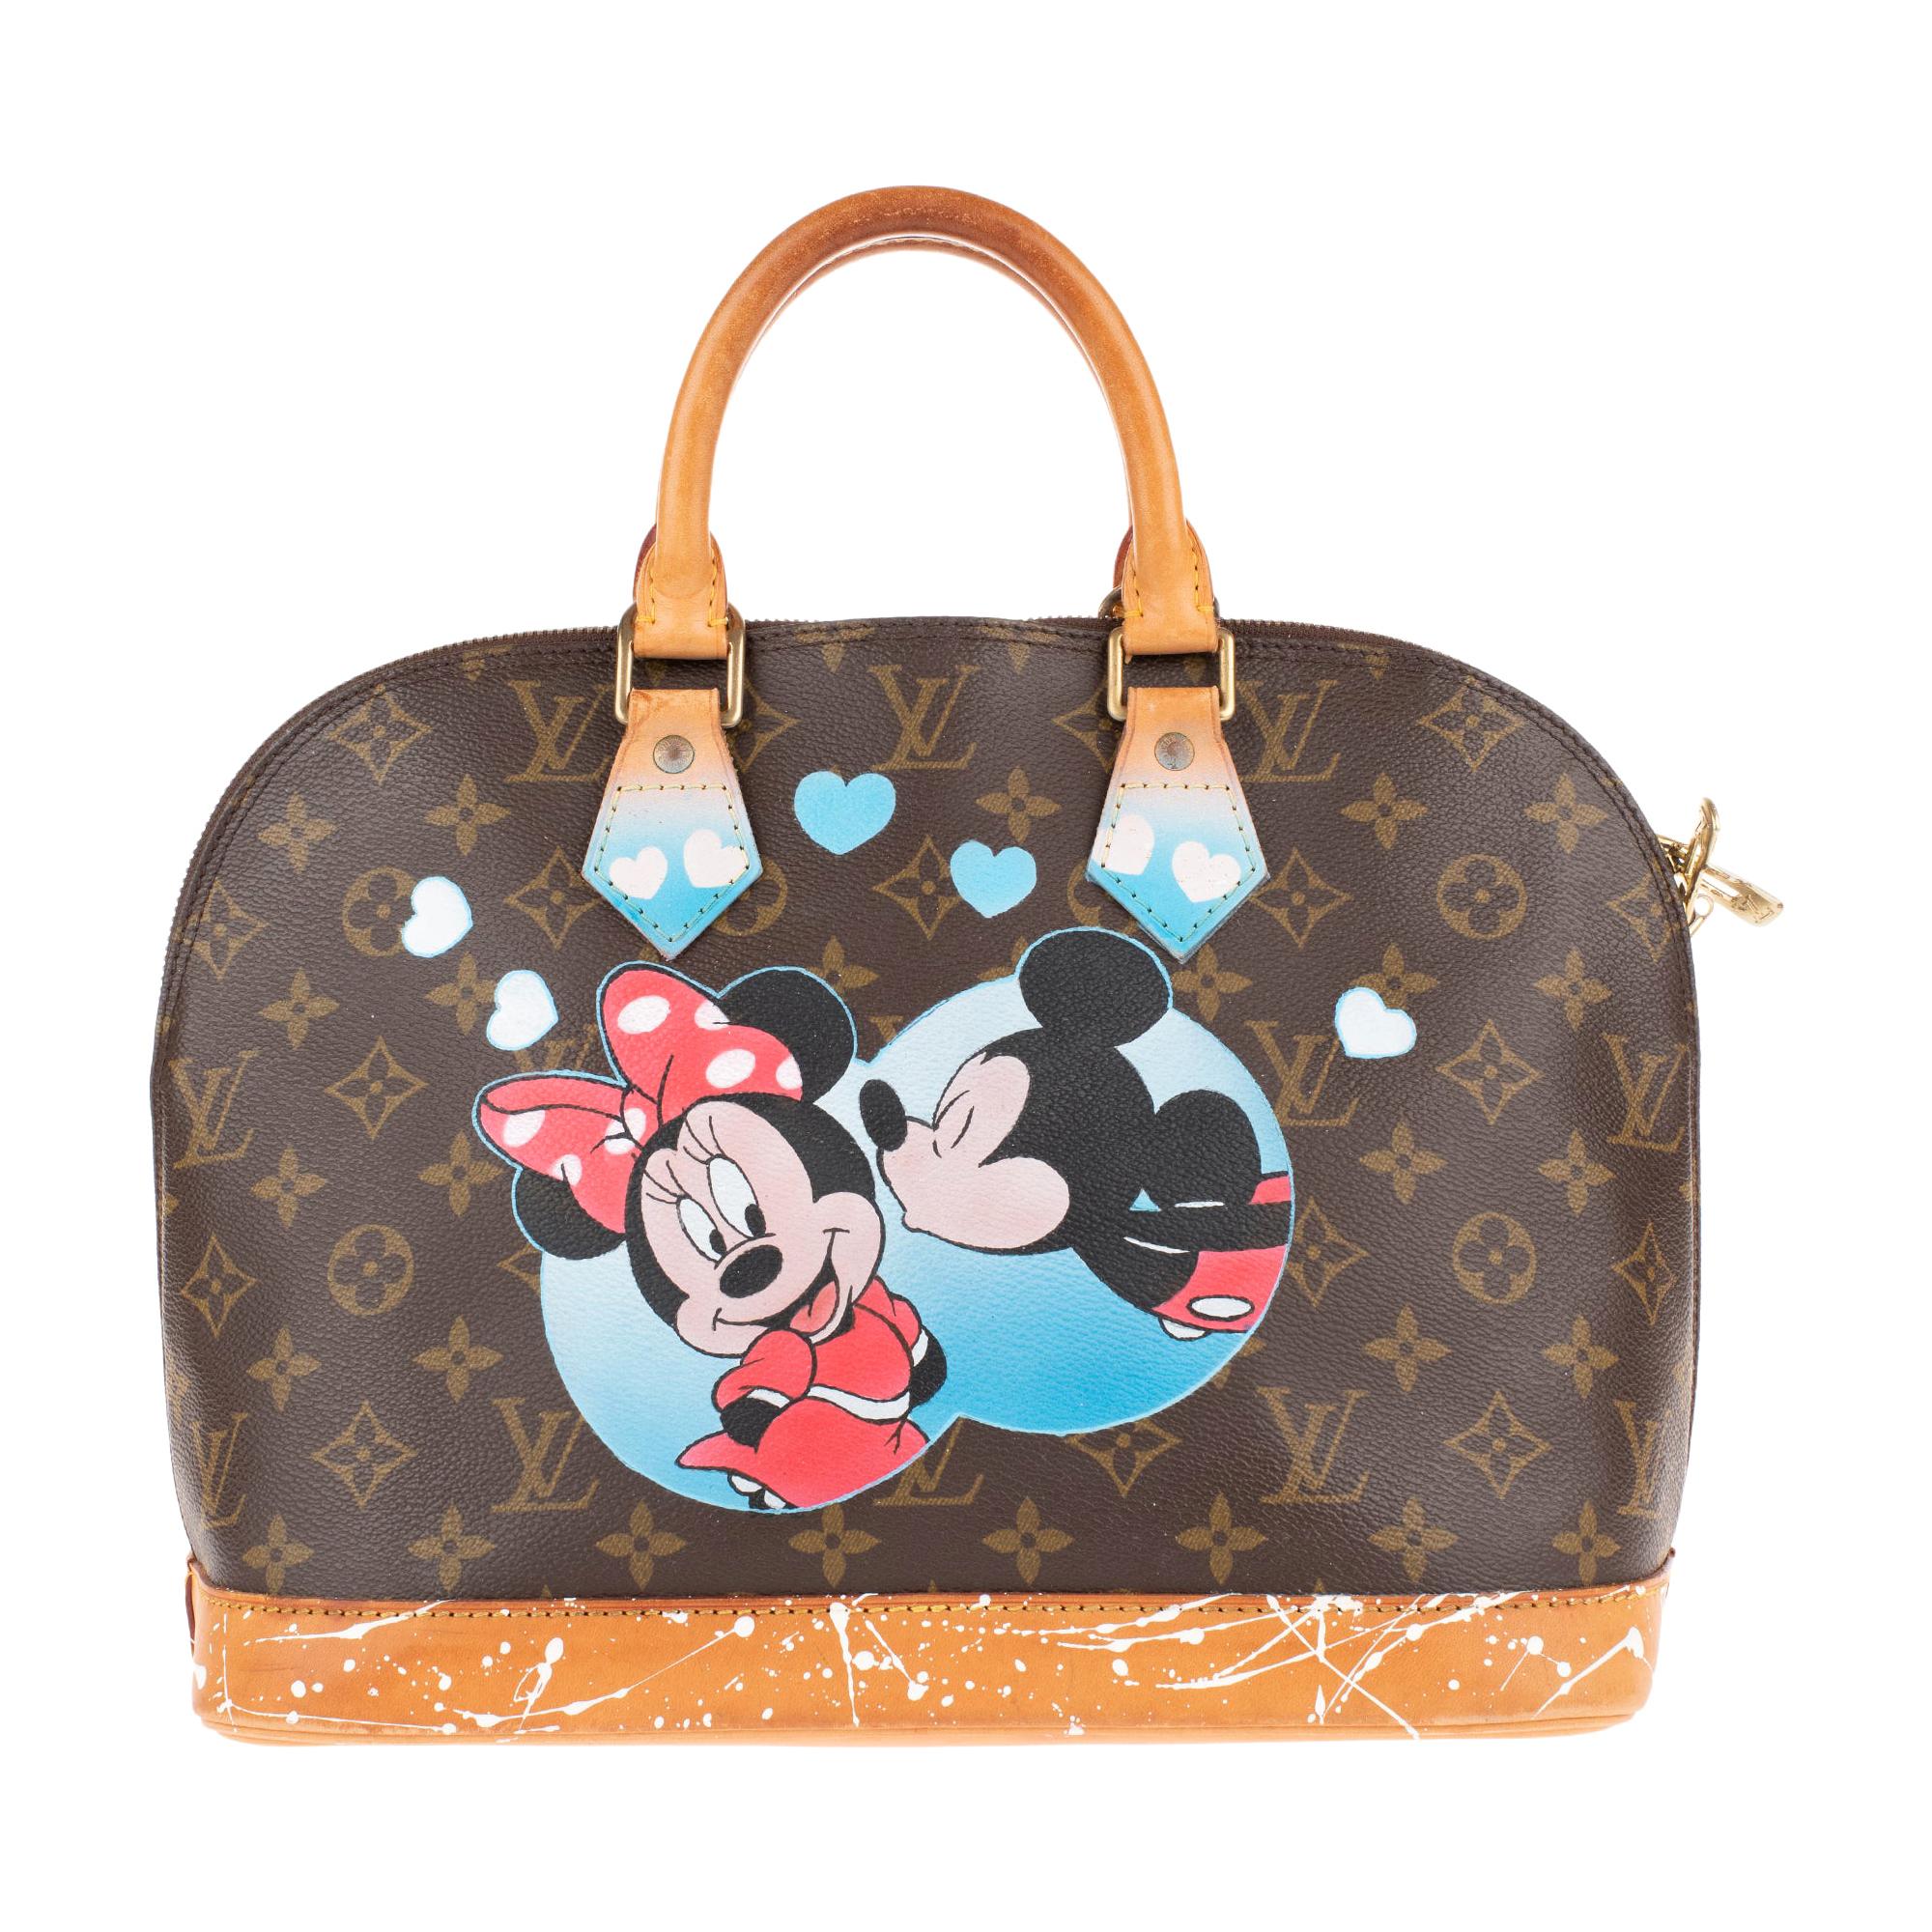 Louis Vuitton Alma Monogram customized "Minnie&Mickey" by the artist PatBo !